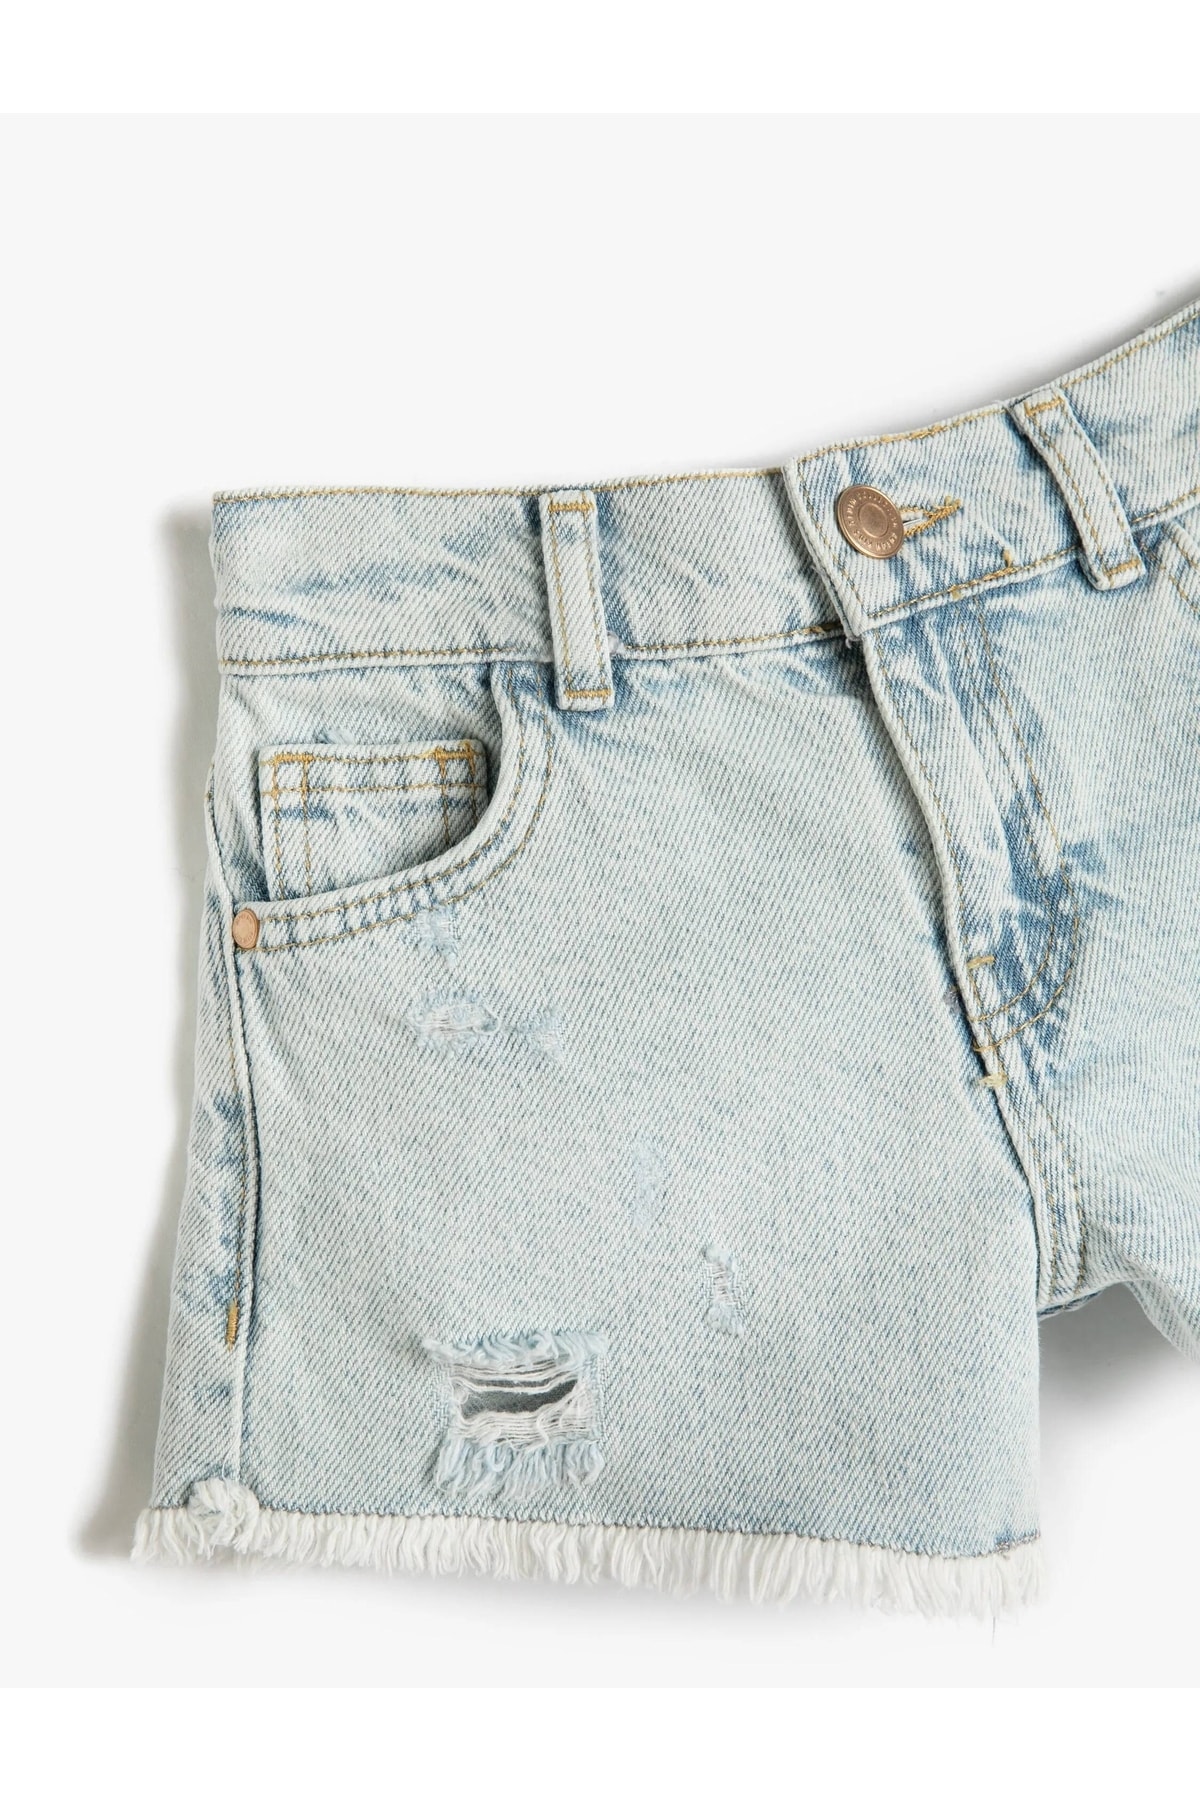 Levně Koton Denim Shorts with Pockets Frayed Detailed Cotton Tasseled Edges with Adjustable Elastic Waist